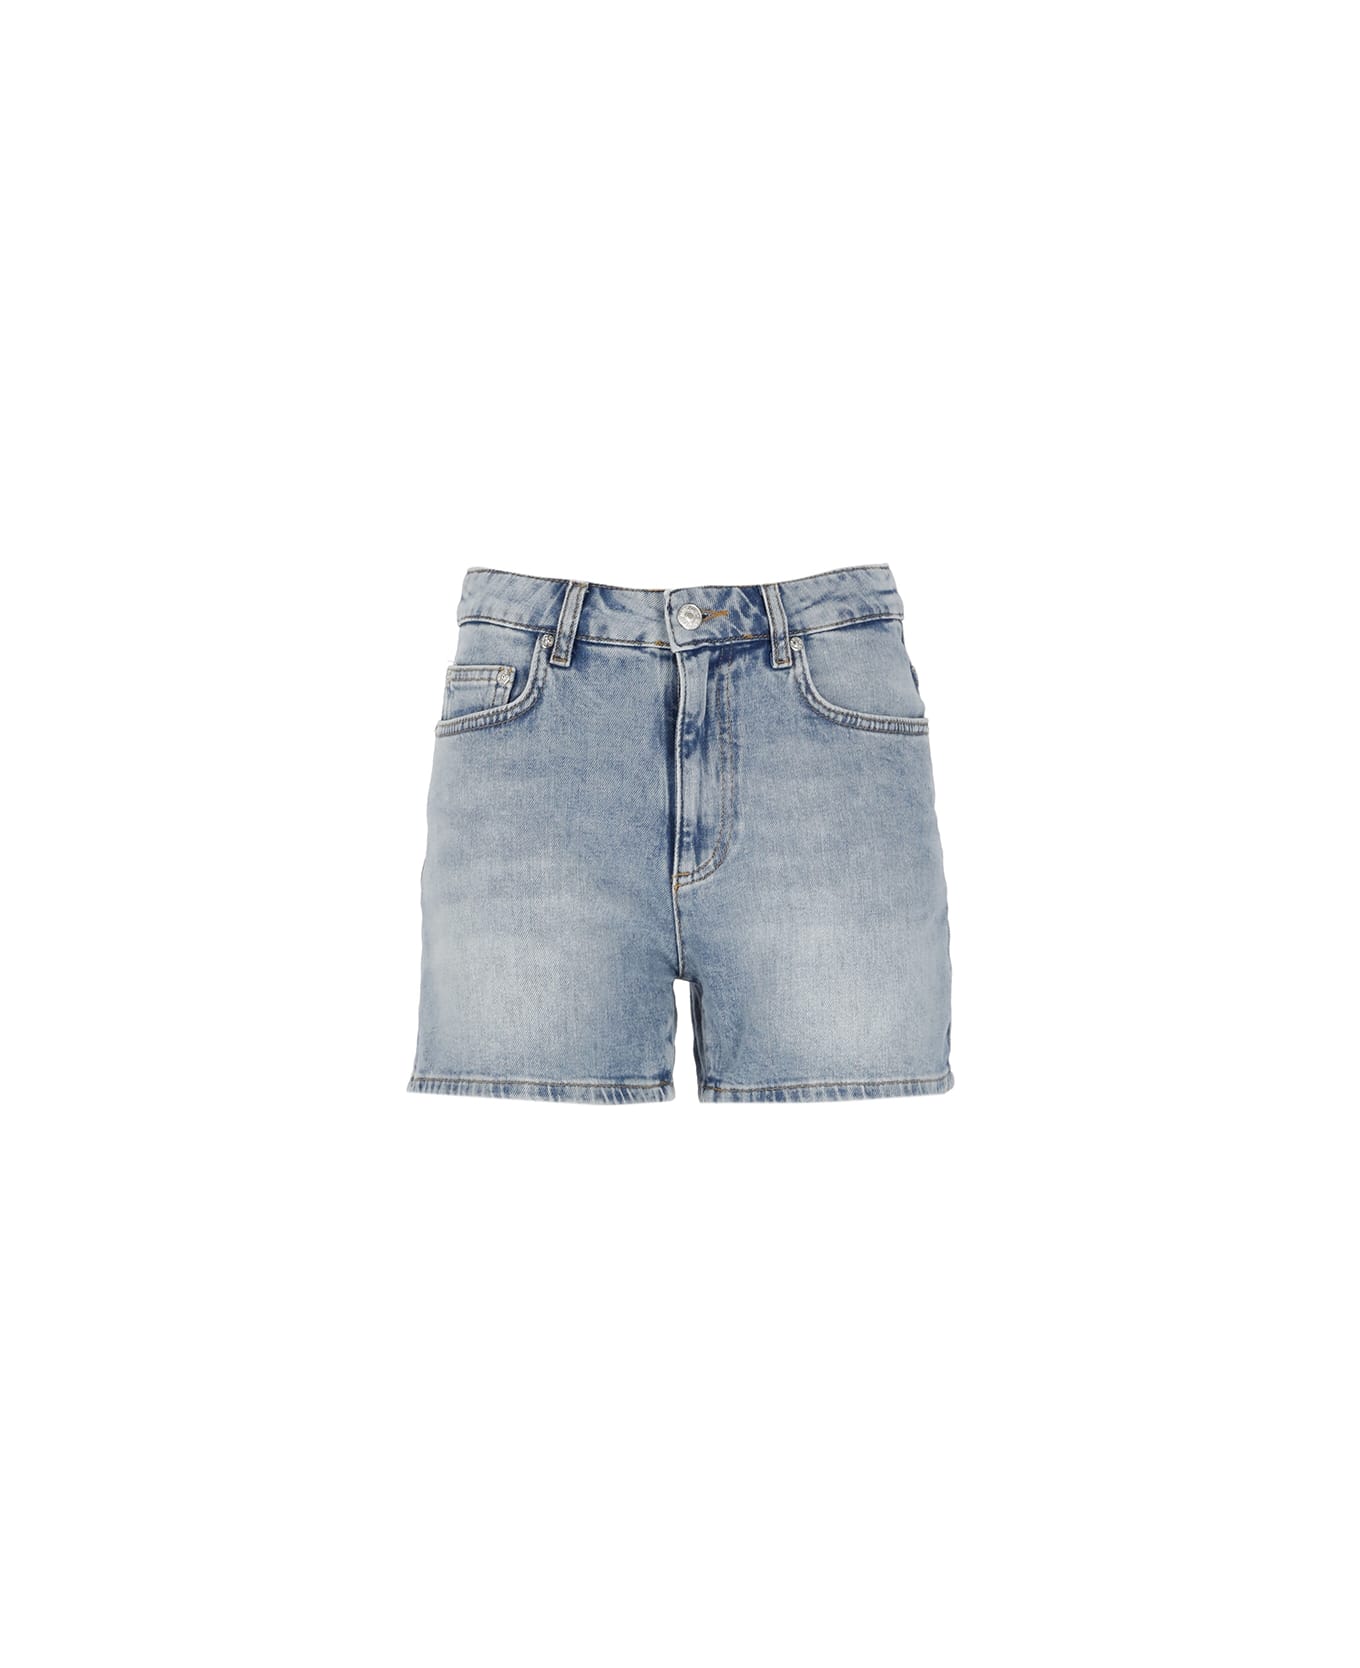 M05CH1N0 Jeans Cotton Shorts - Light Blue ショートパンツ